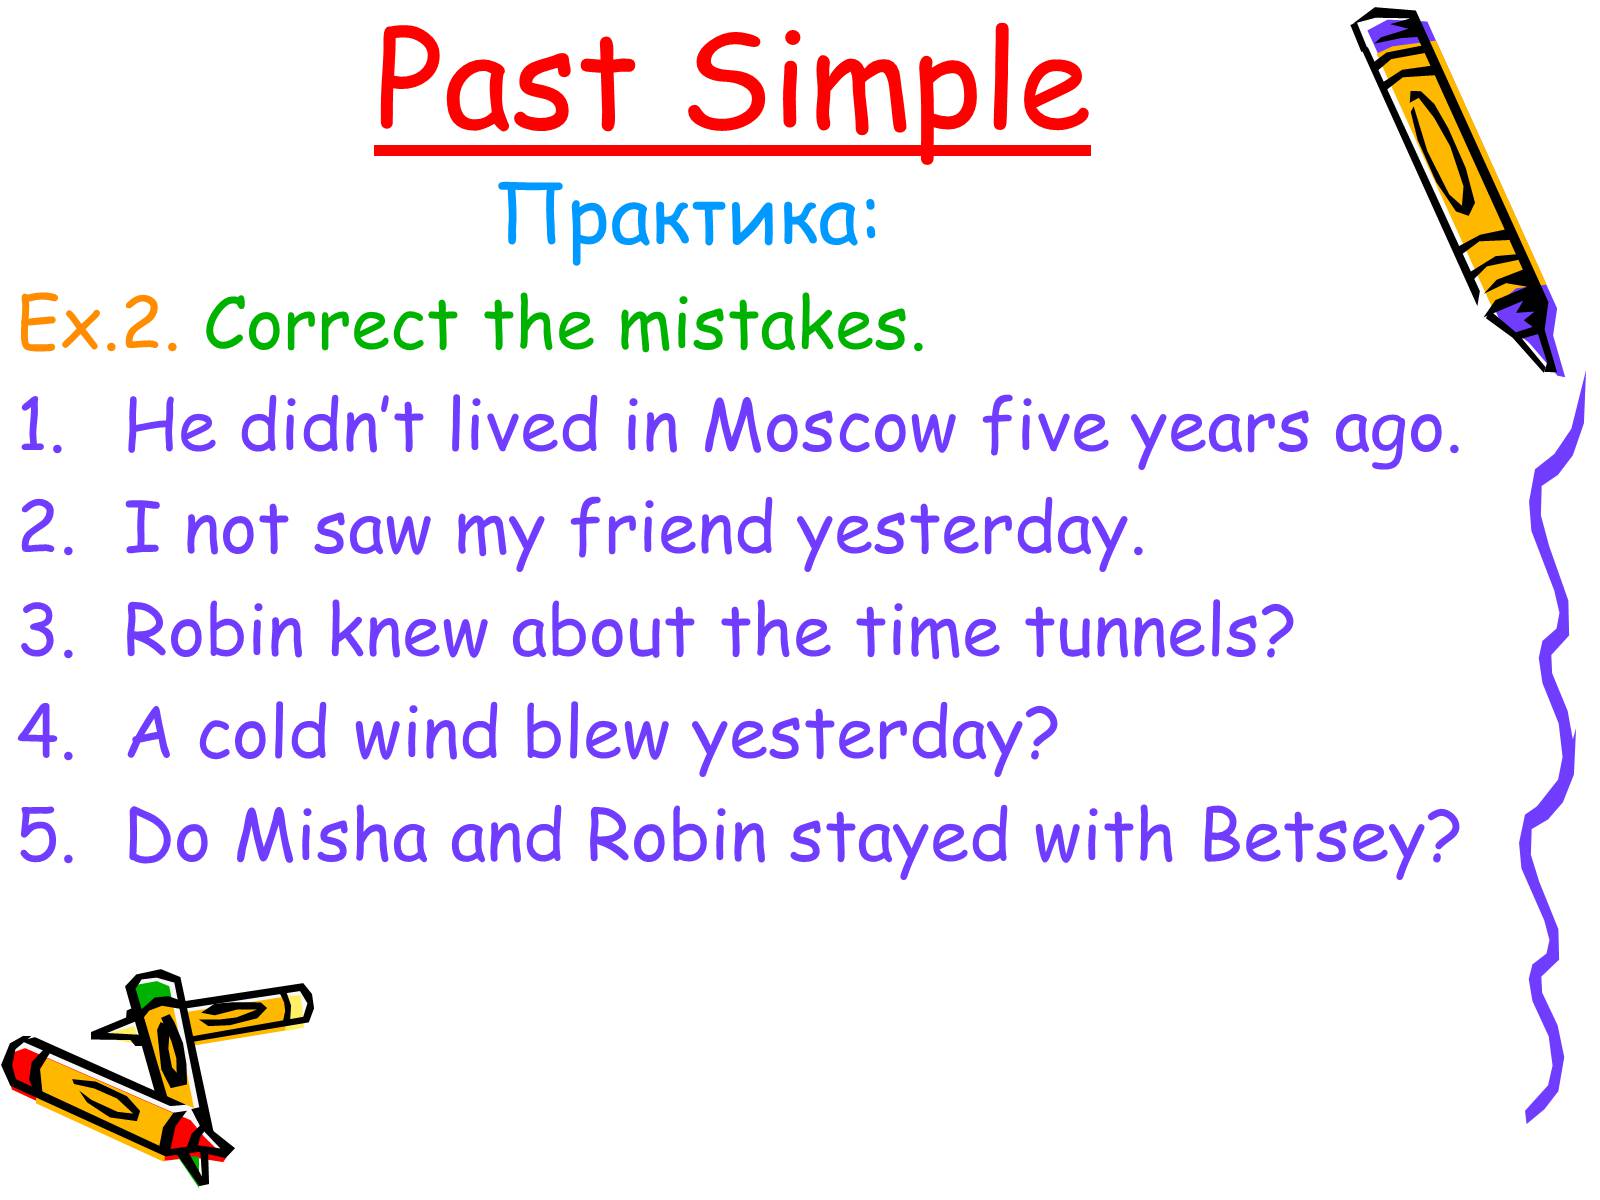 Pat simple. Паст Симпл. Past simple упражнения для детей. Past simple Найди ошибки. Past simple задания для детей.